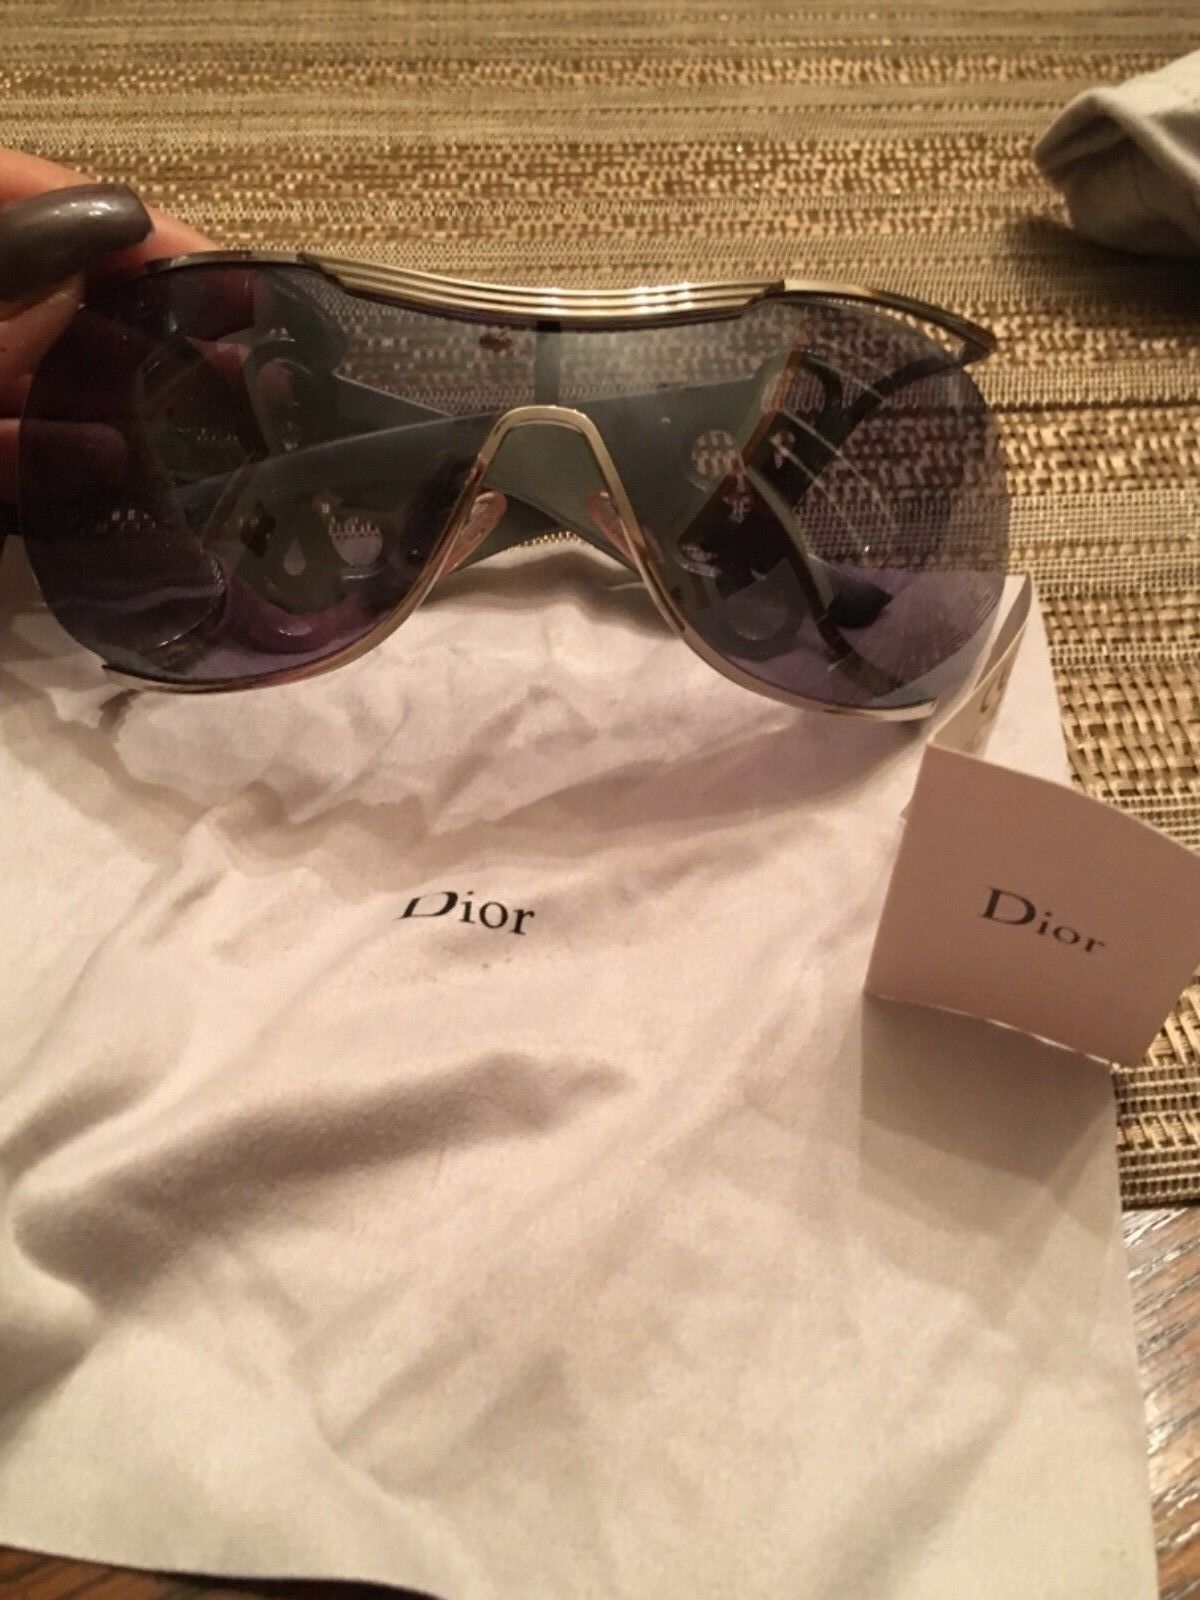 dior limited edition sunglasses